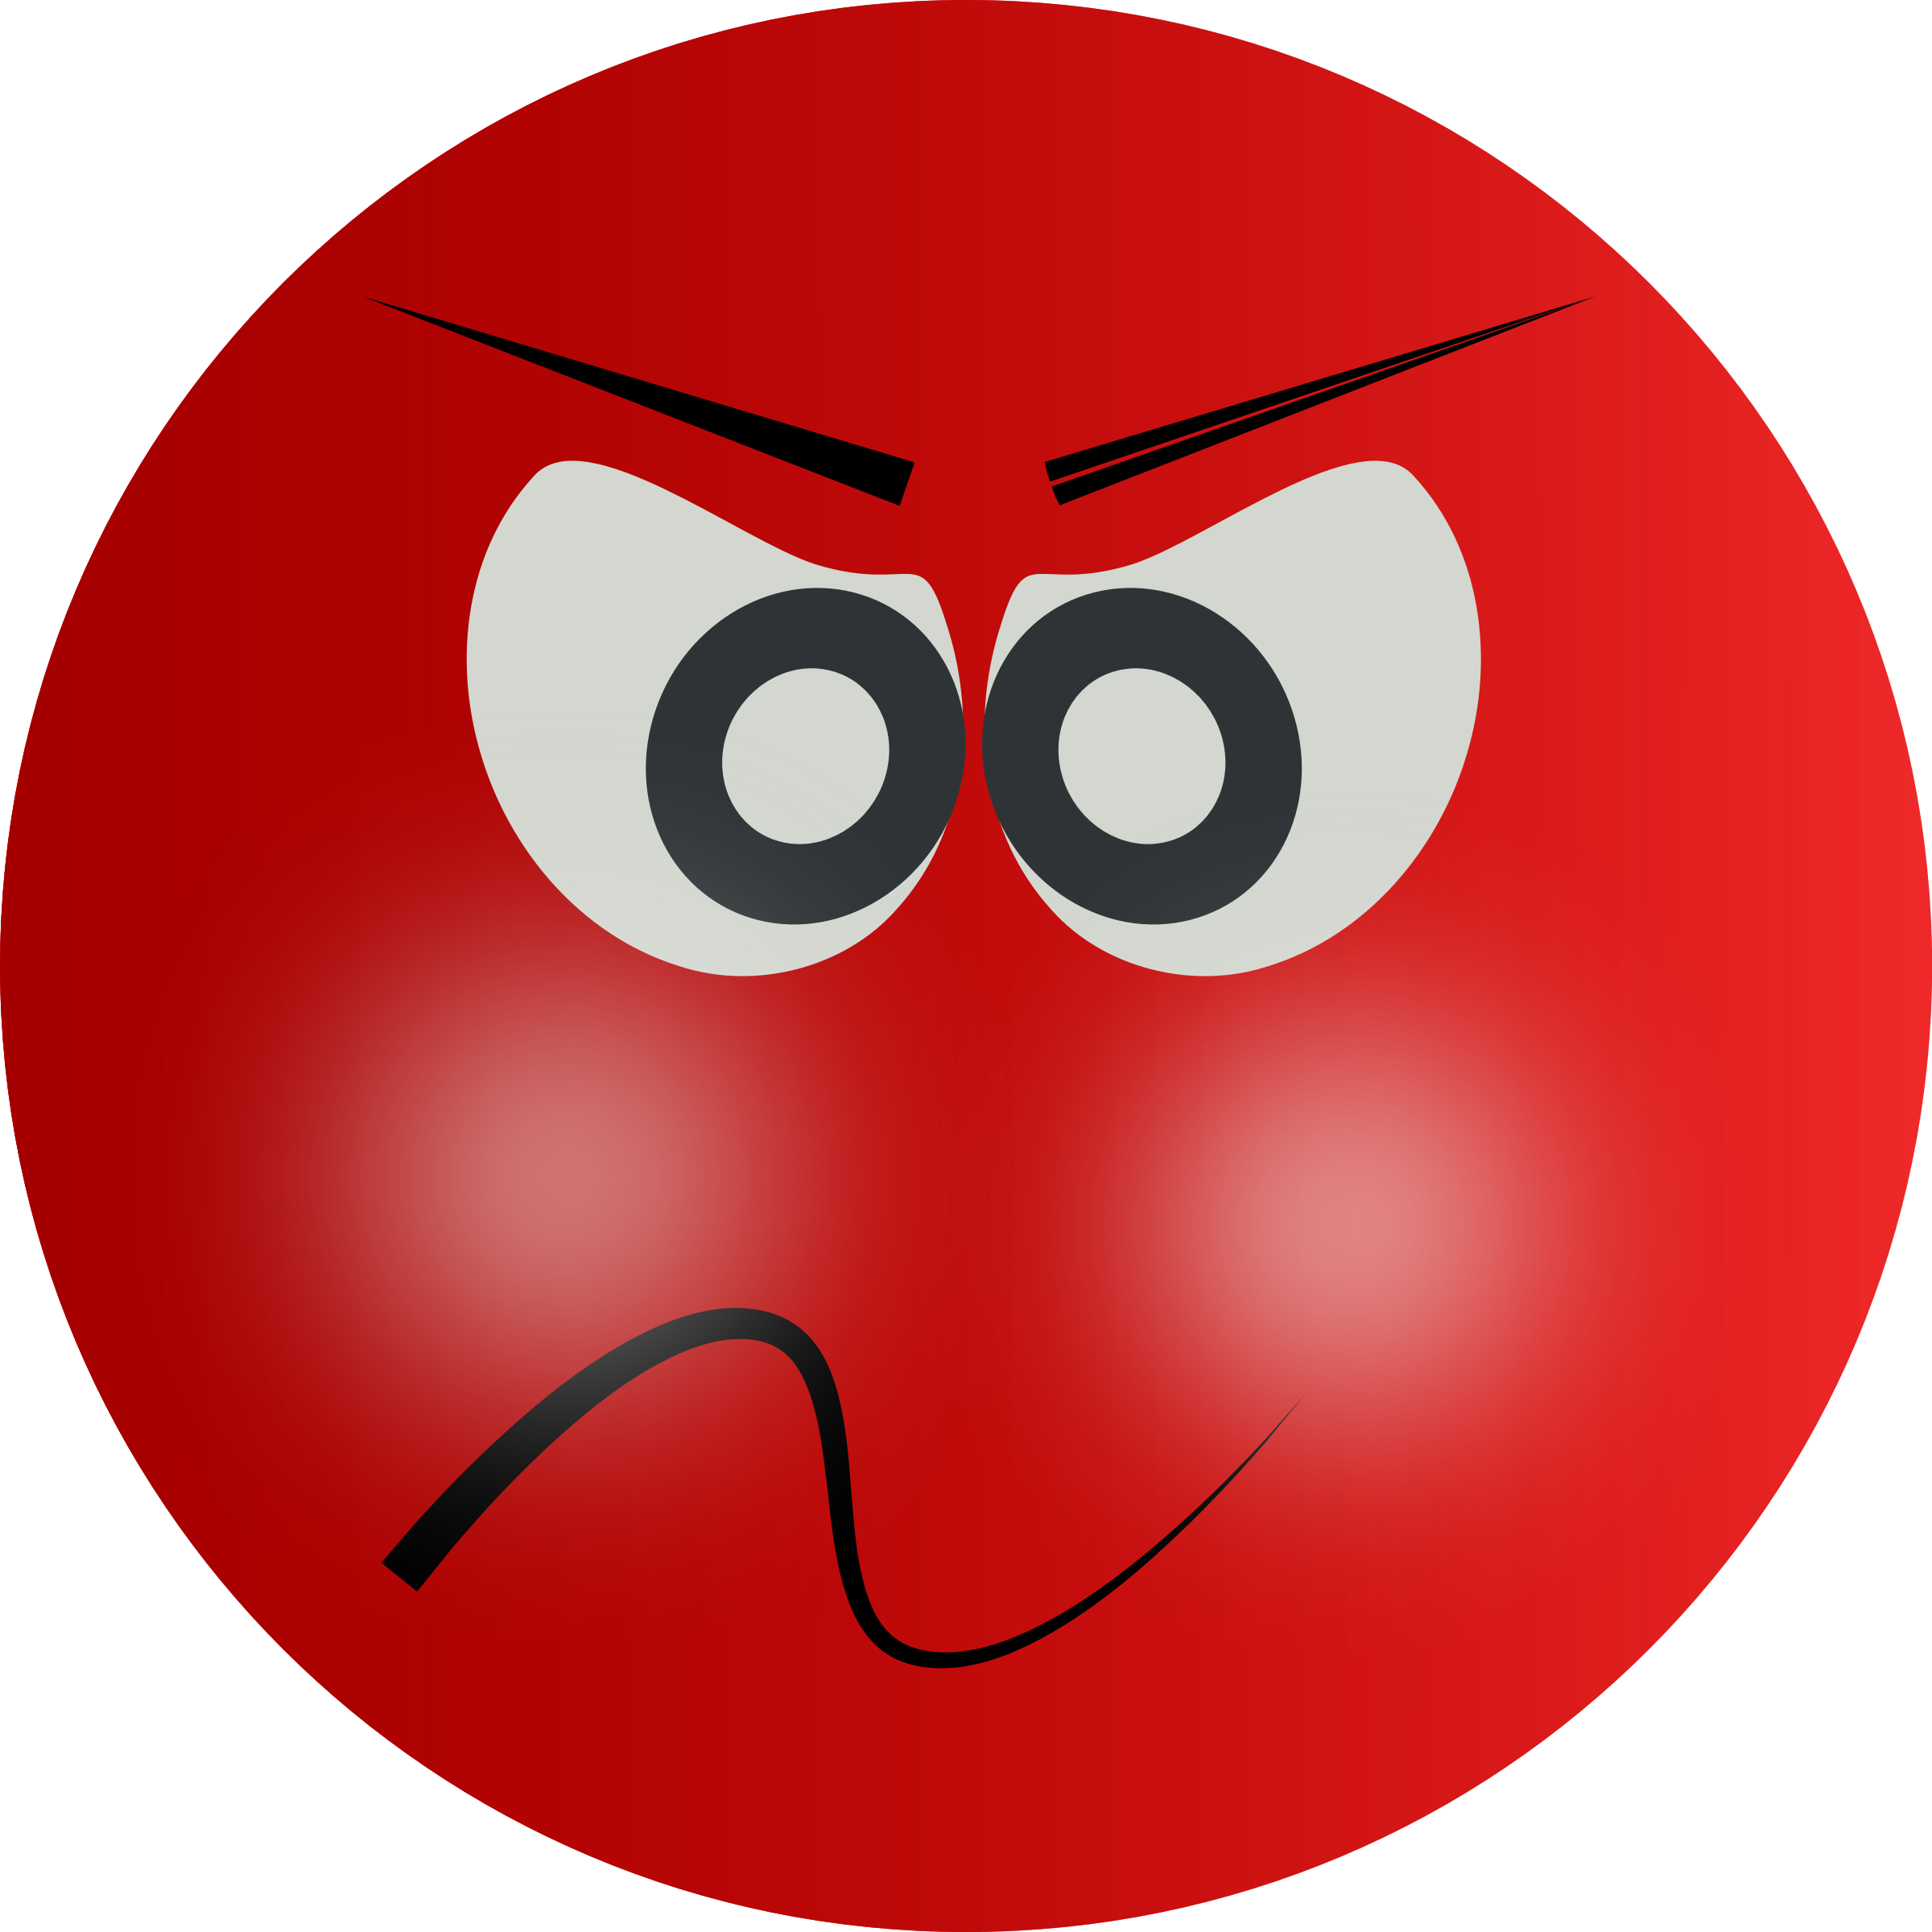 Red Angry Crying Emoji Free PNG Image